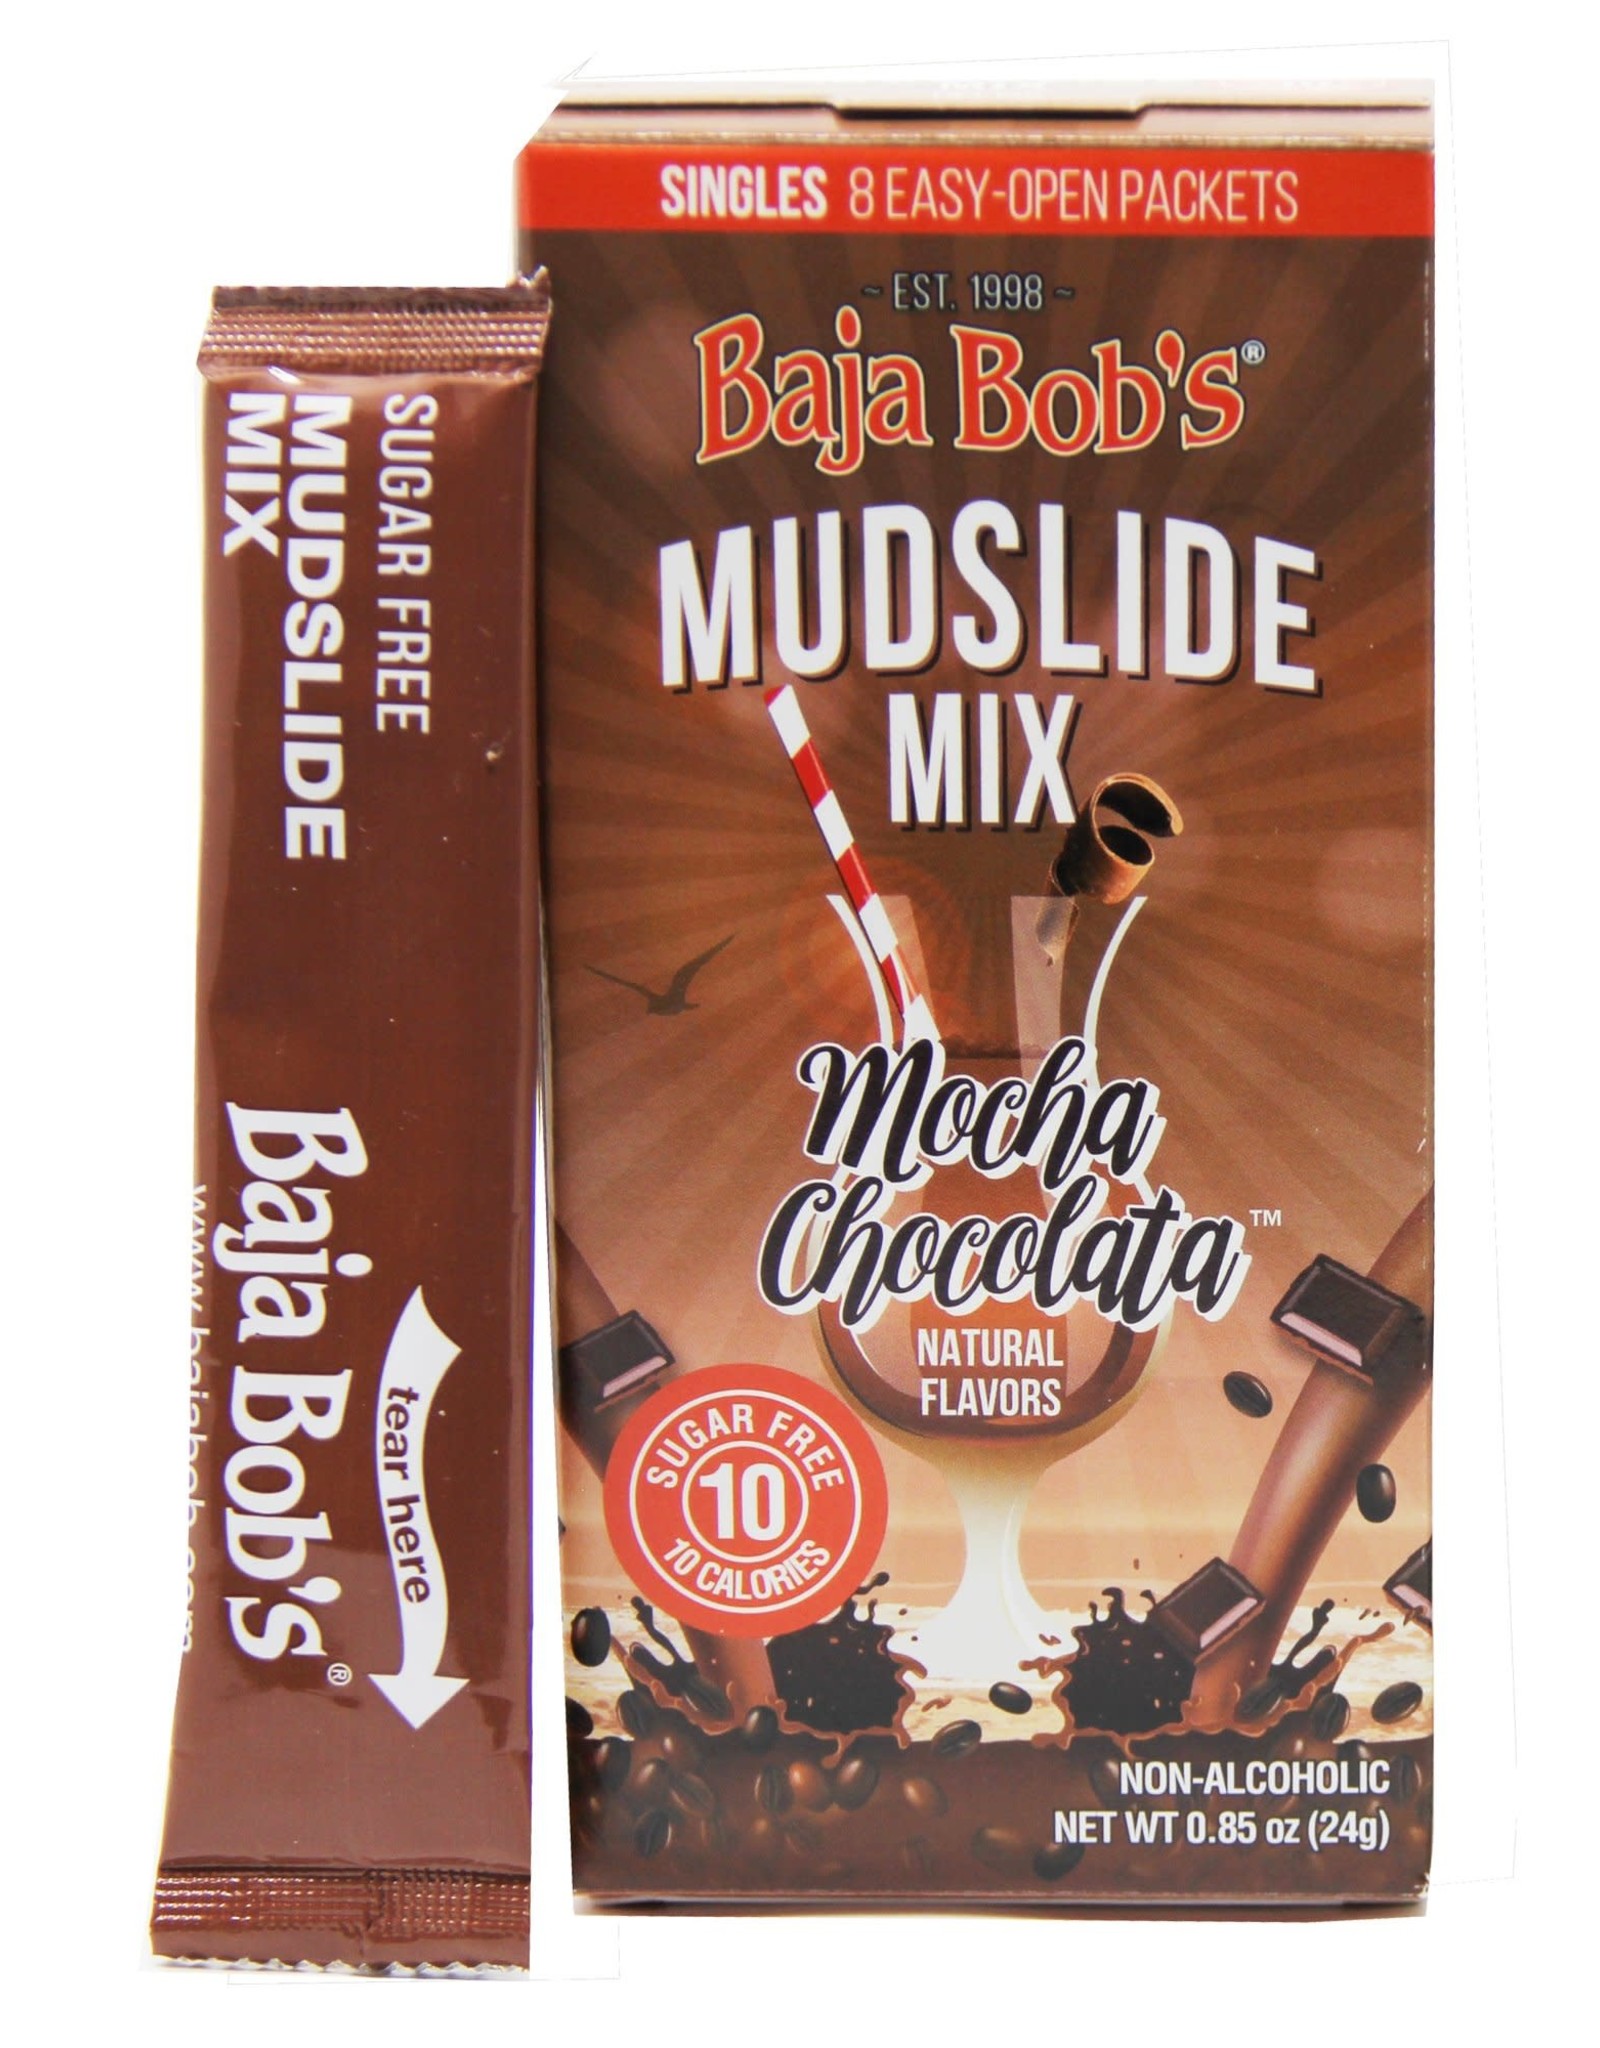 Baja Bob's Mud Slide Singles Powder Mix 8 pk